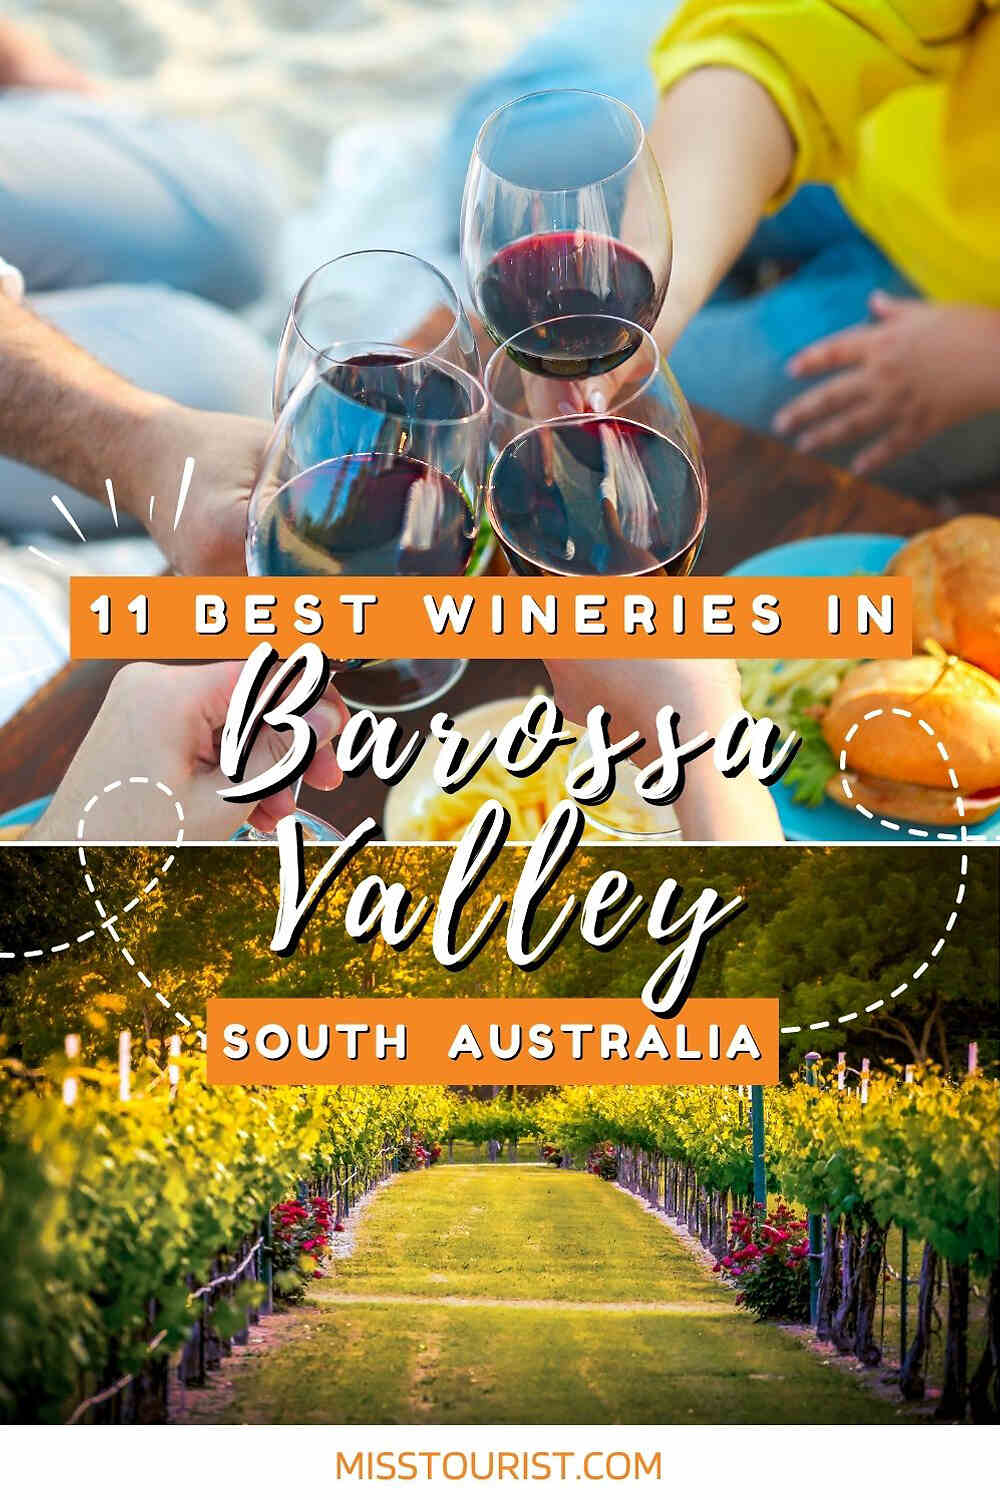 barossa valley wineries in australia pin 2